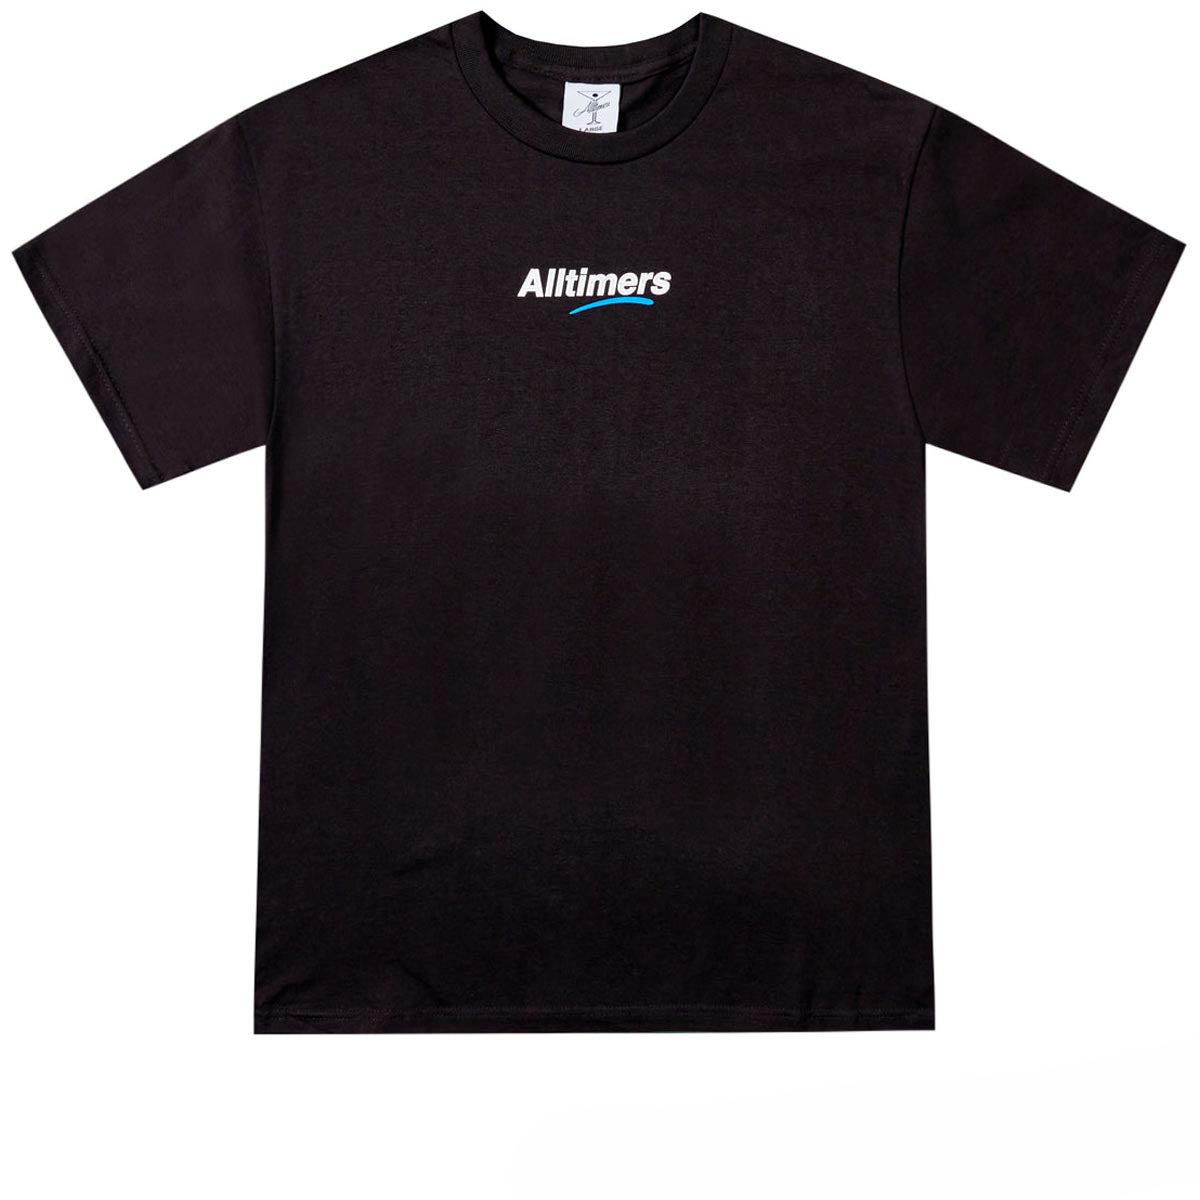 Alltimers Mid Range Estate T-Shirt - Black image 1